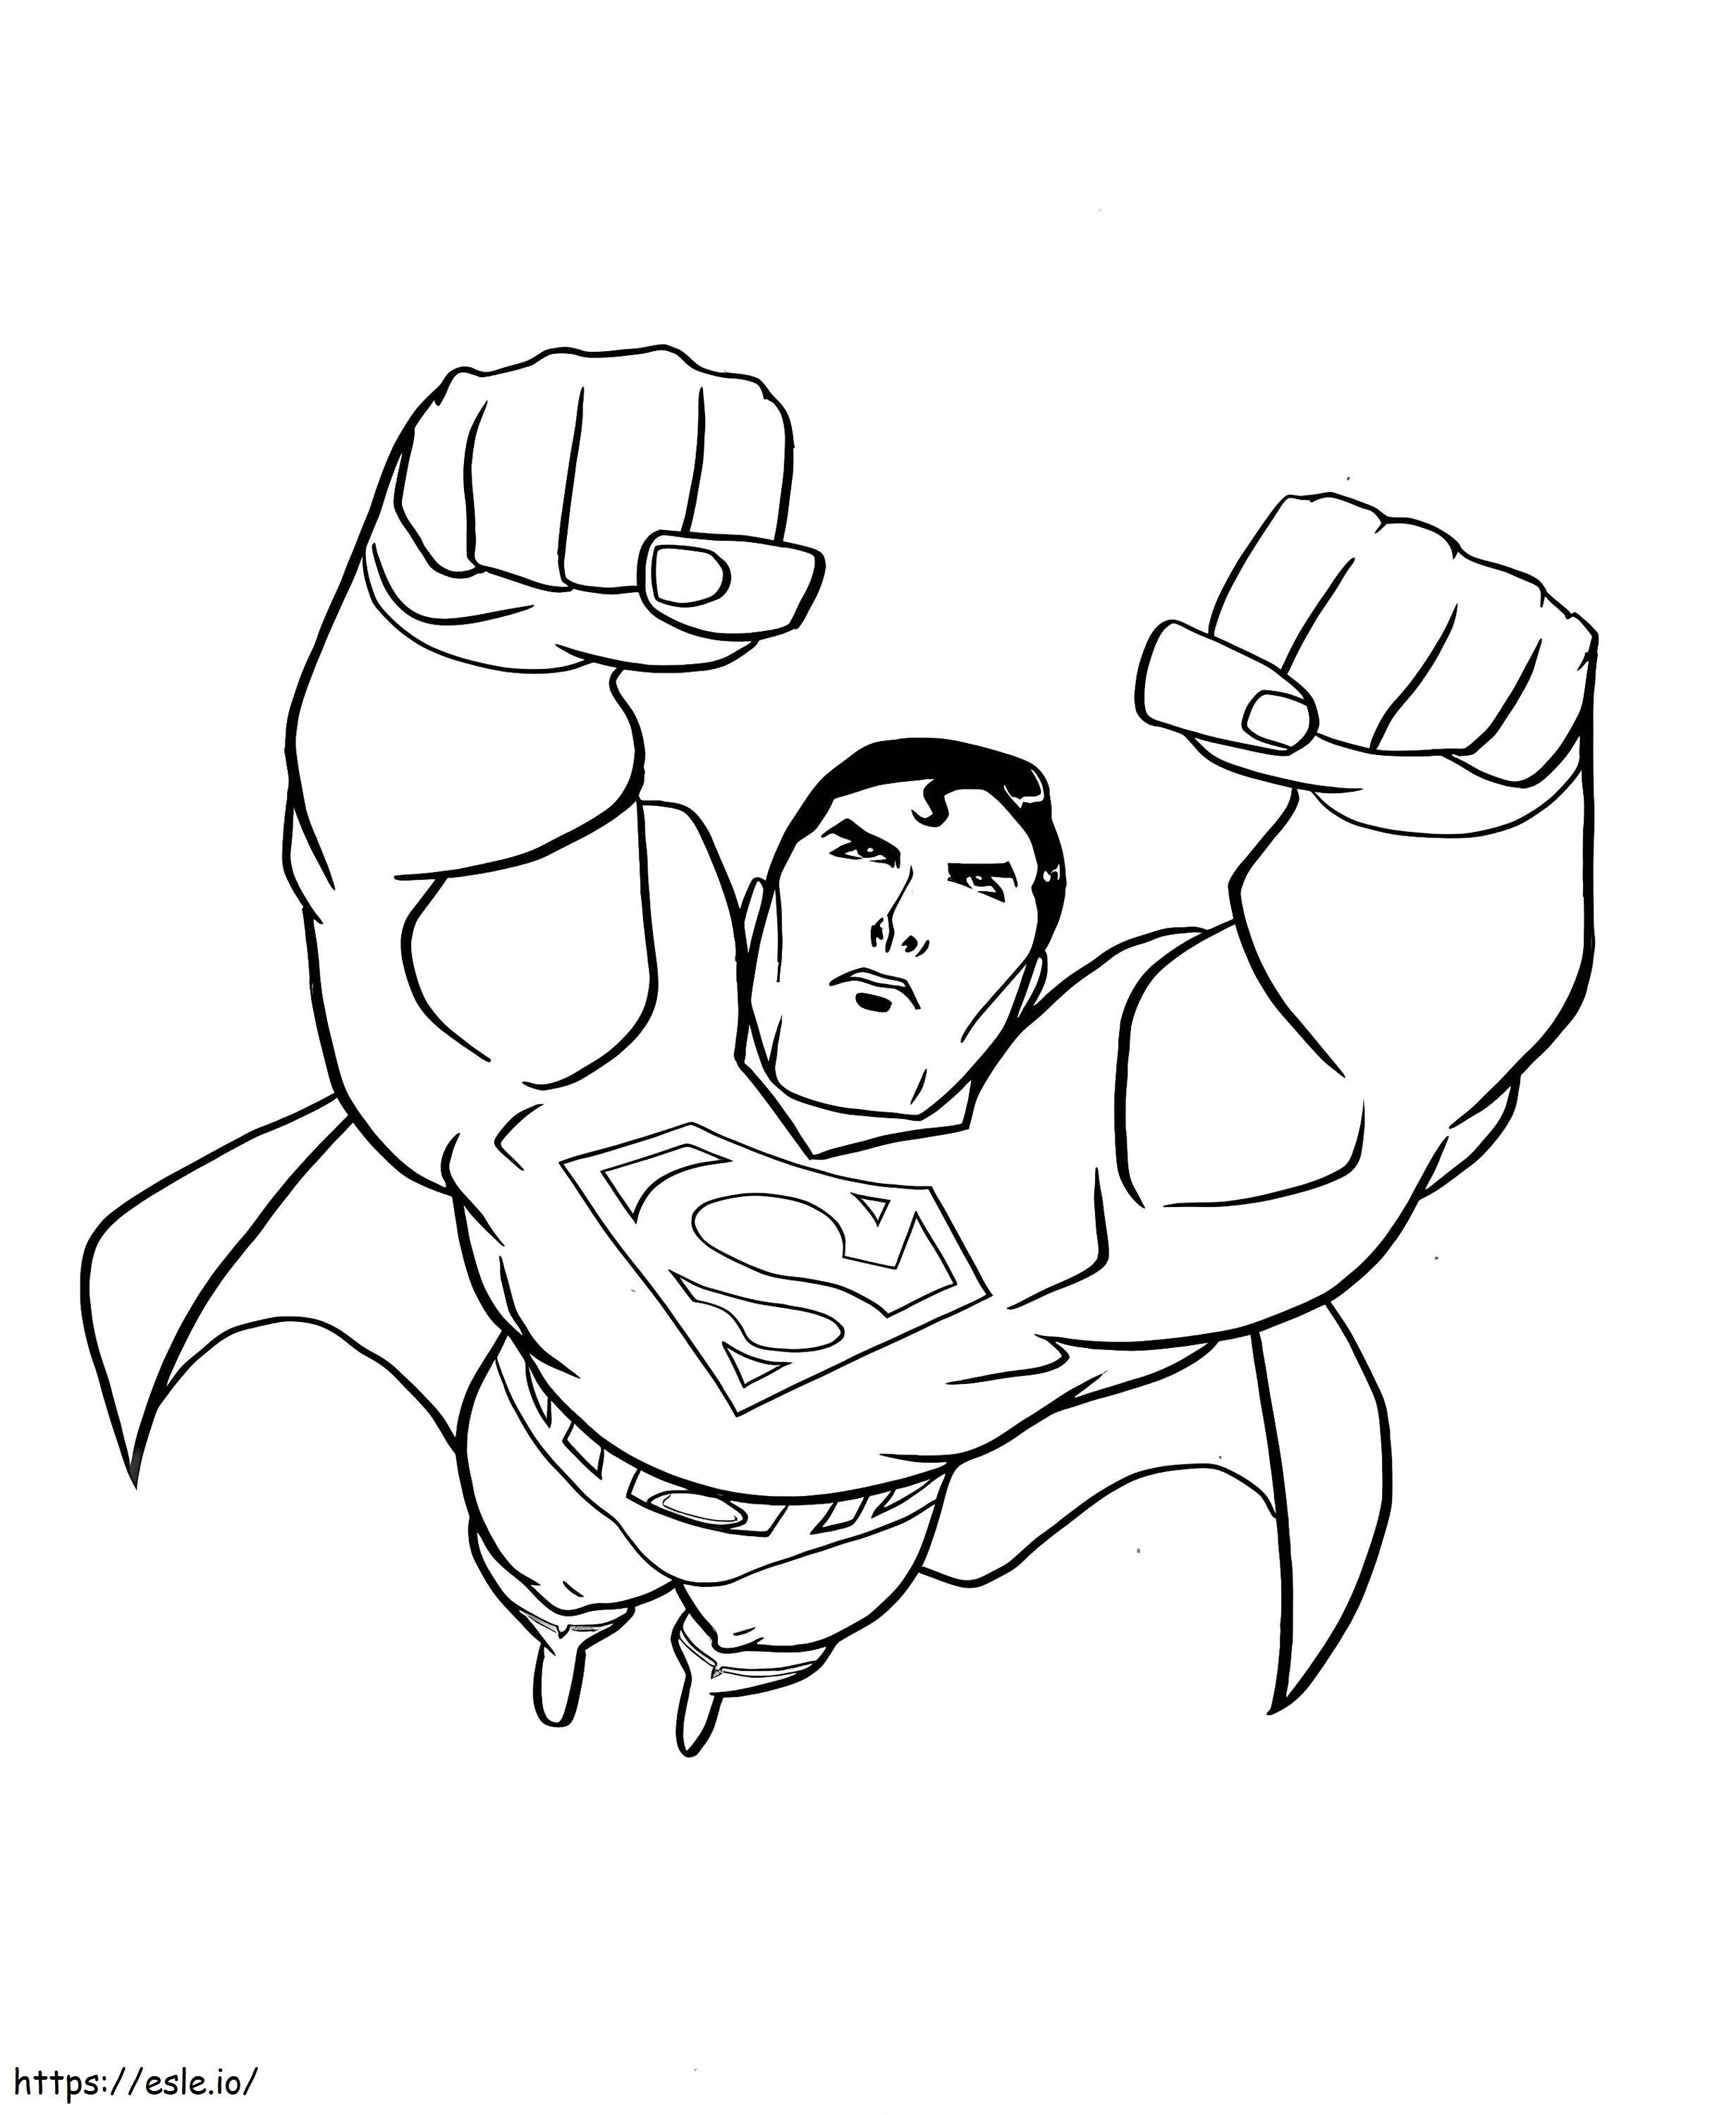 Hero Superman coloring page